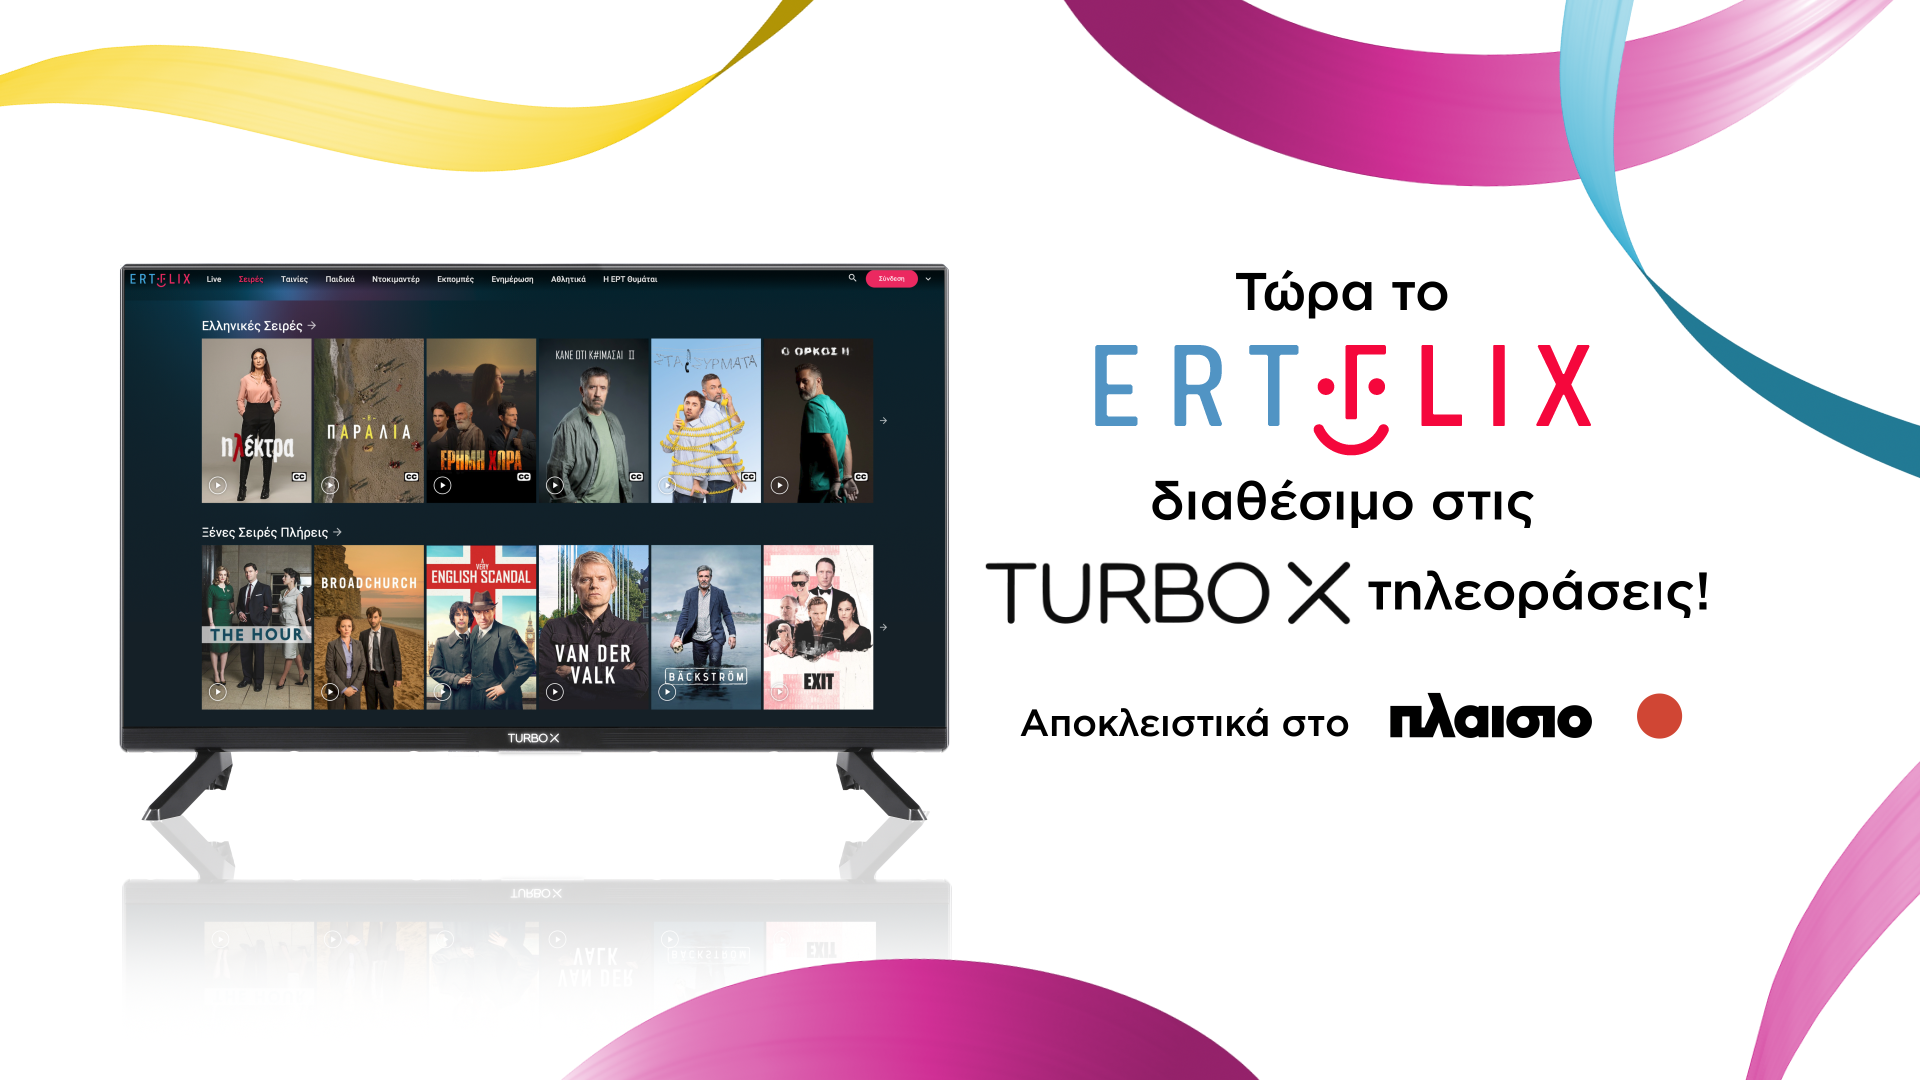 Turbo-X & ERTFLIX: Μια μεγάλη συνεργασία δύο μεγάλων ελληνικών brands